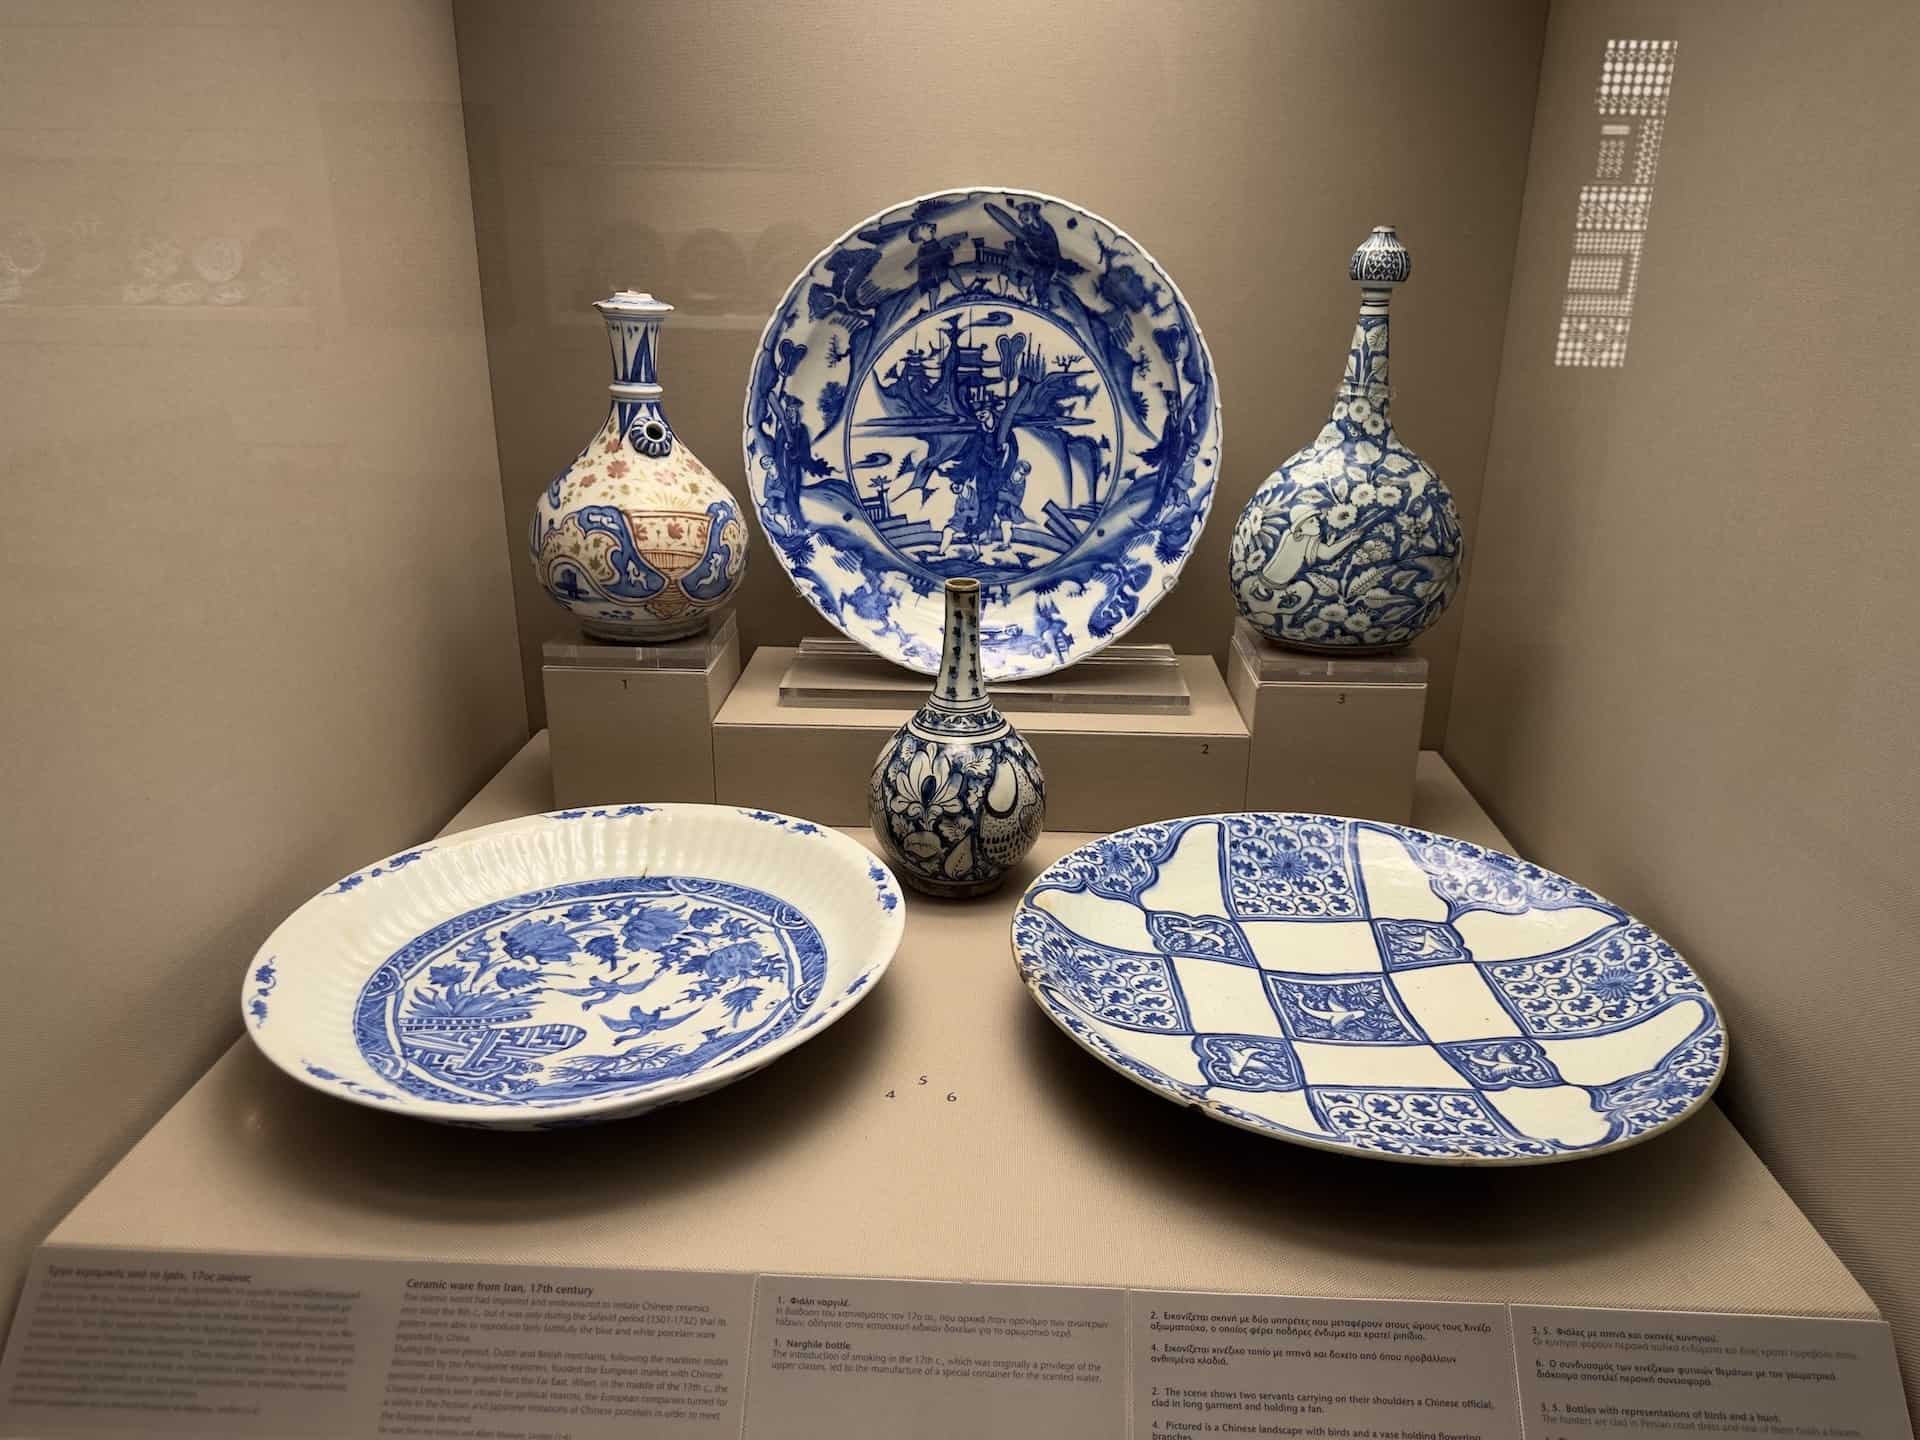 Ceramic ware from Iran; 17th century at the Benaki Museum of Islamic Art in Athens, Greece